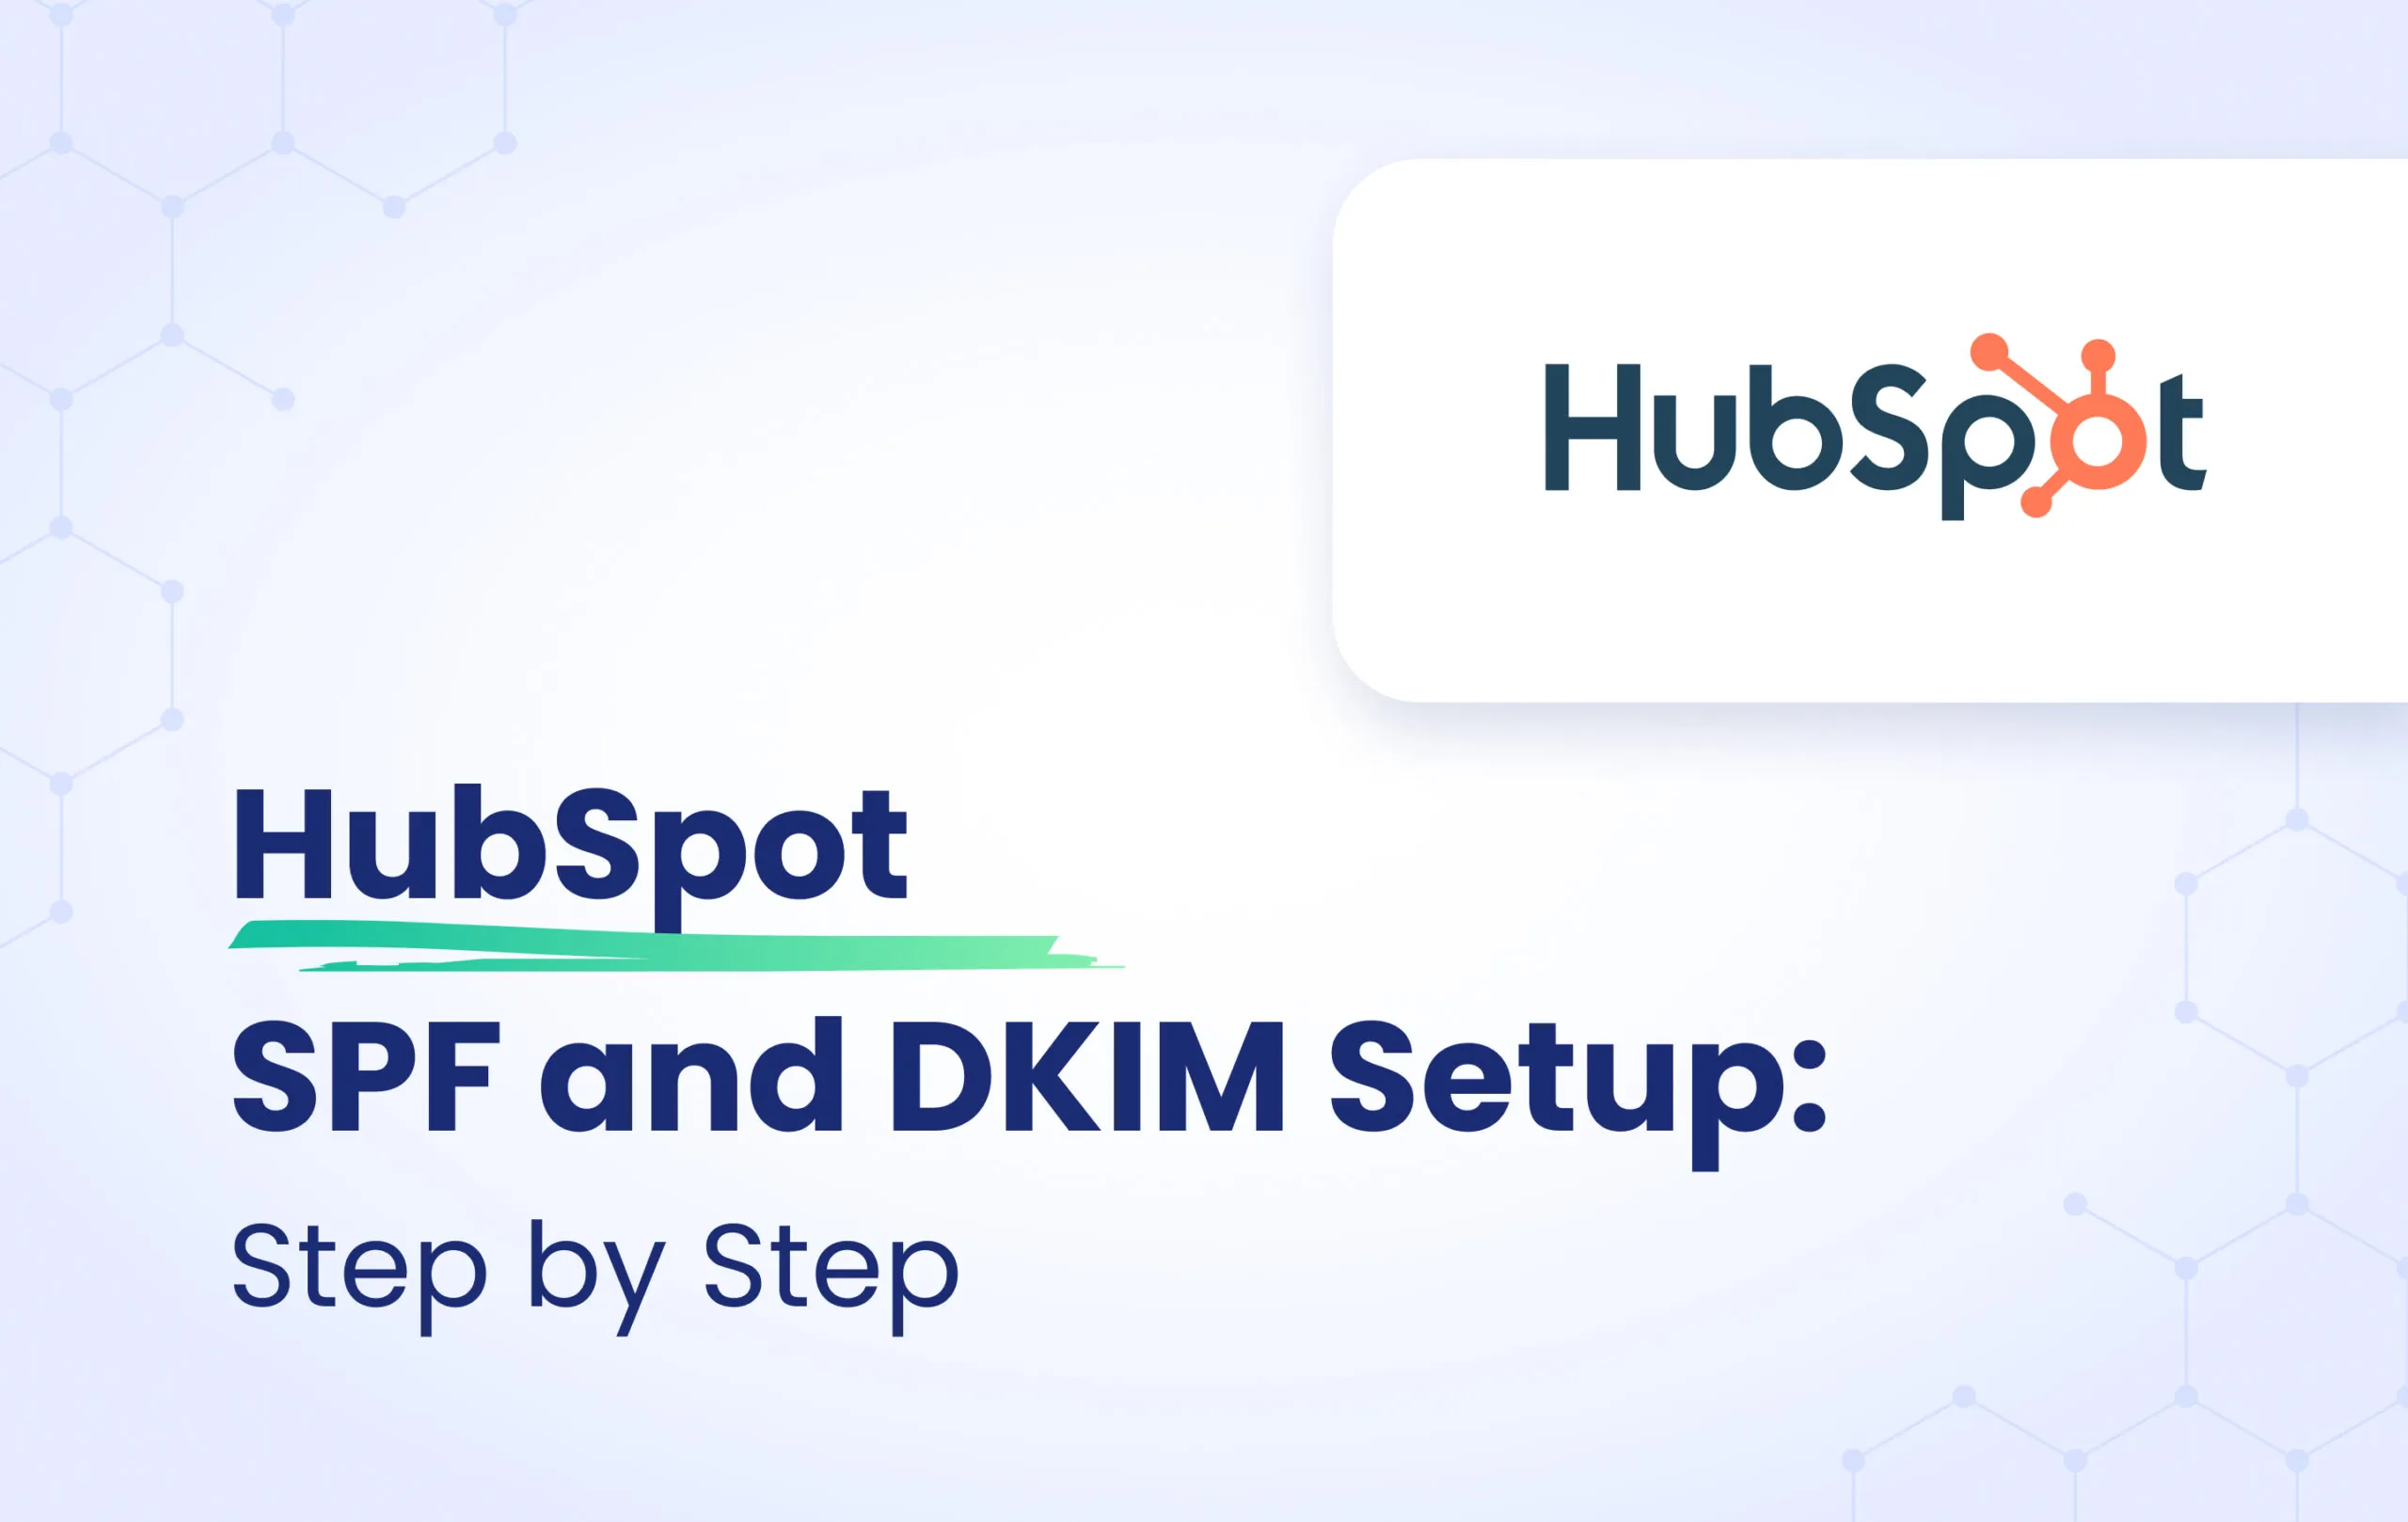 Hubspot SPF and DKIM Configuration